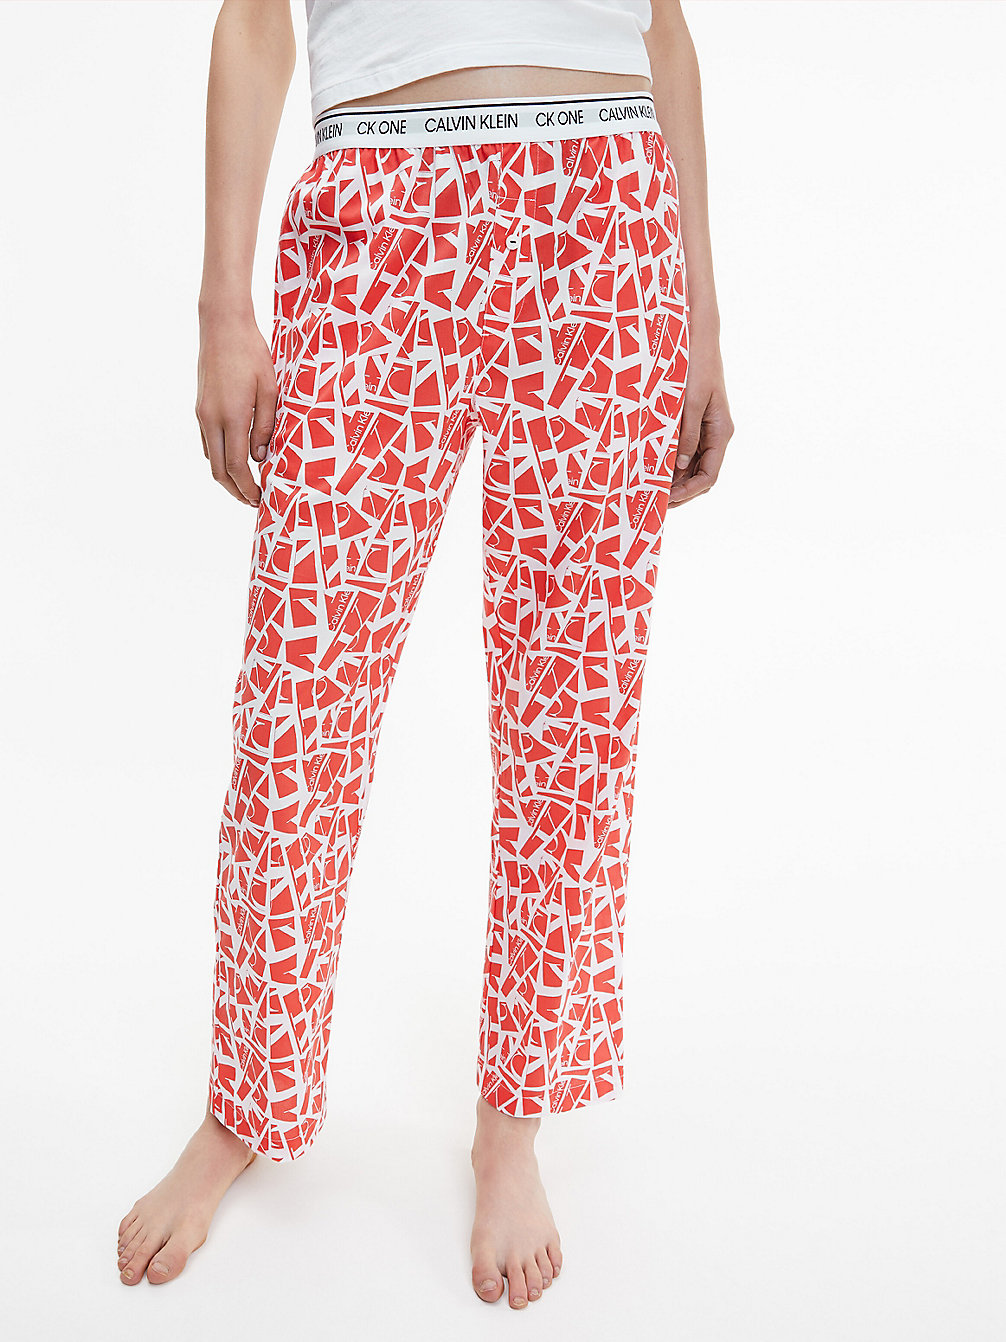 SLICED LOGO PRINT_ORANGE ODYSSEY Pyjama Pants - CK One undefined women Calvin Klein